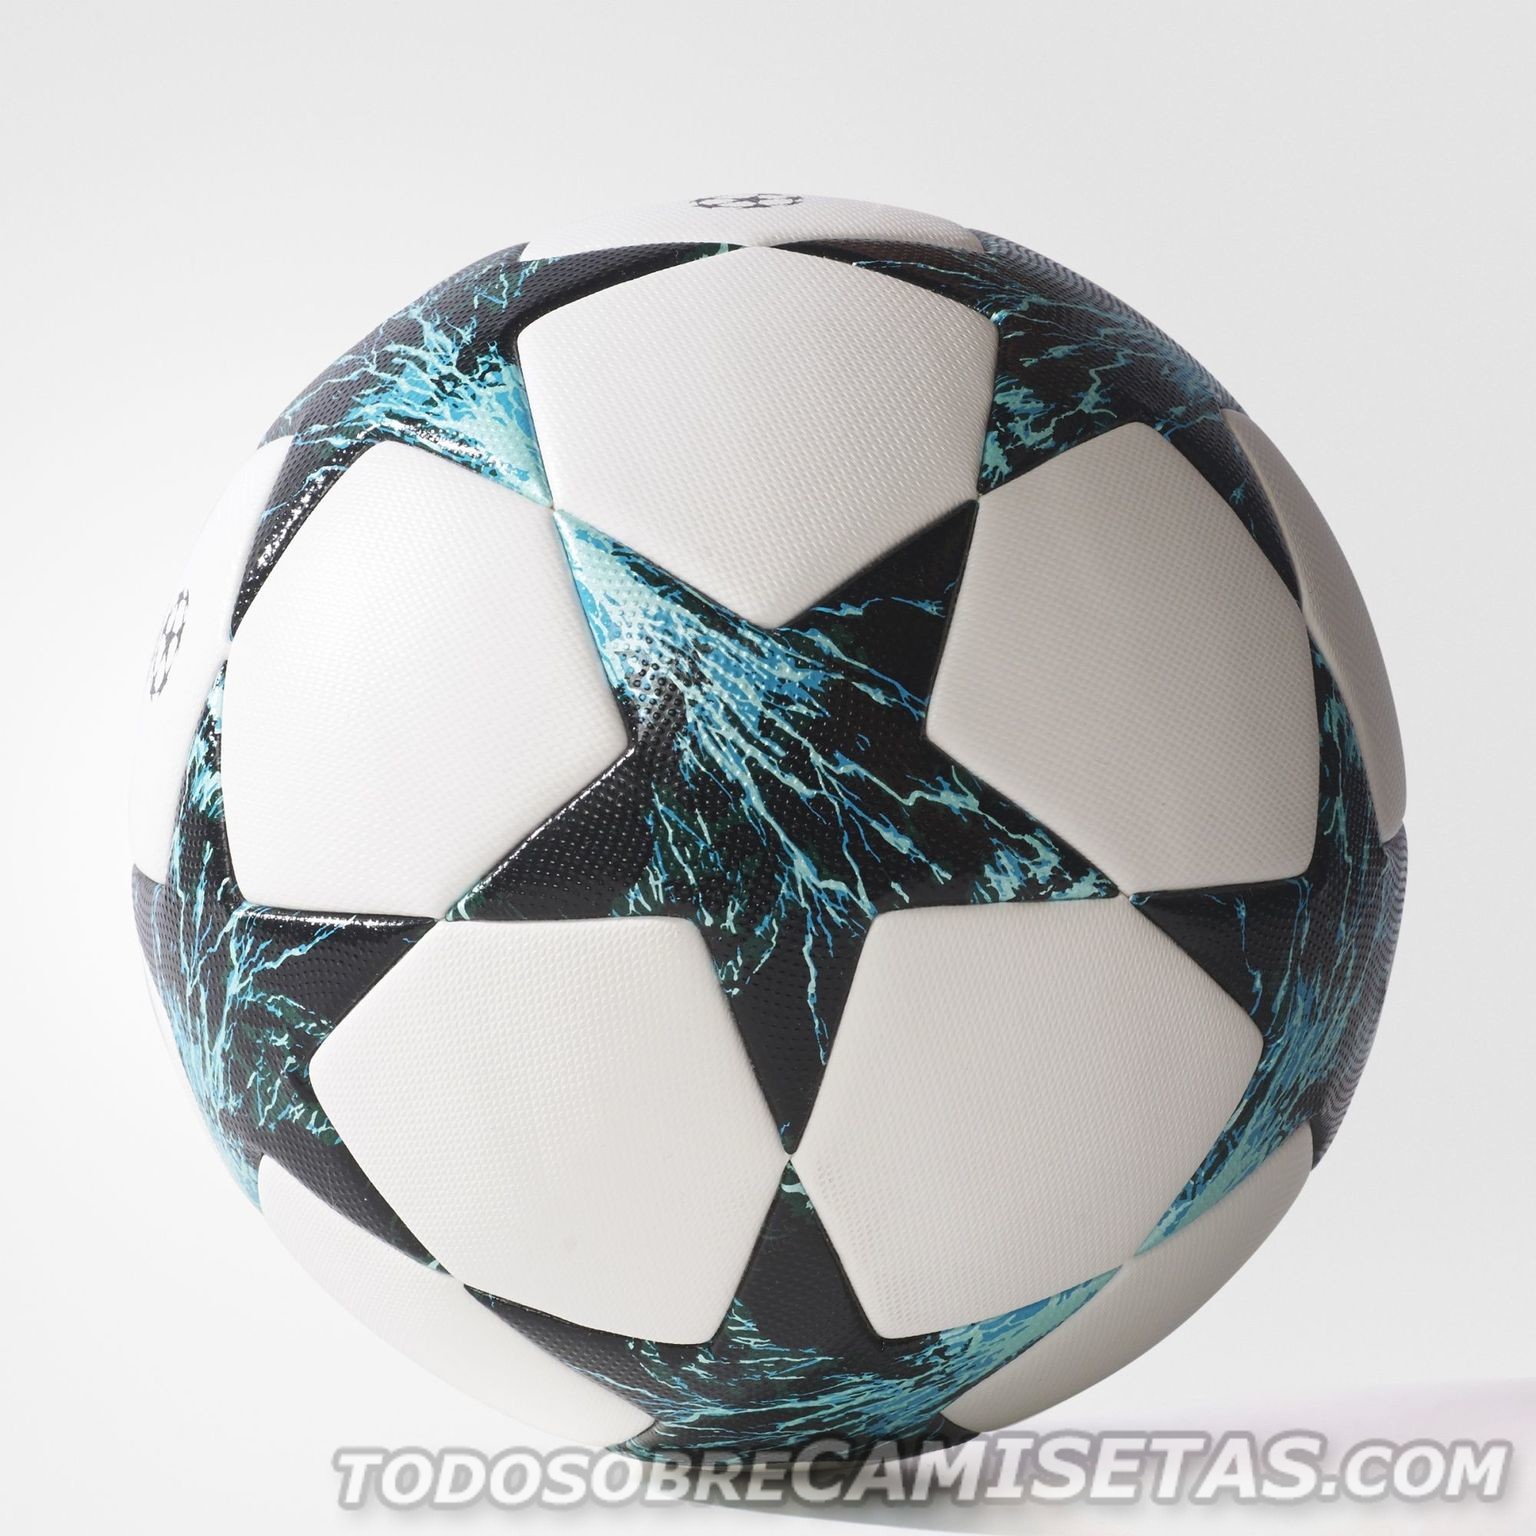 Adidas Champions League 2017-18 ball